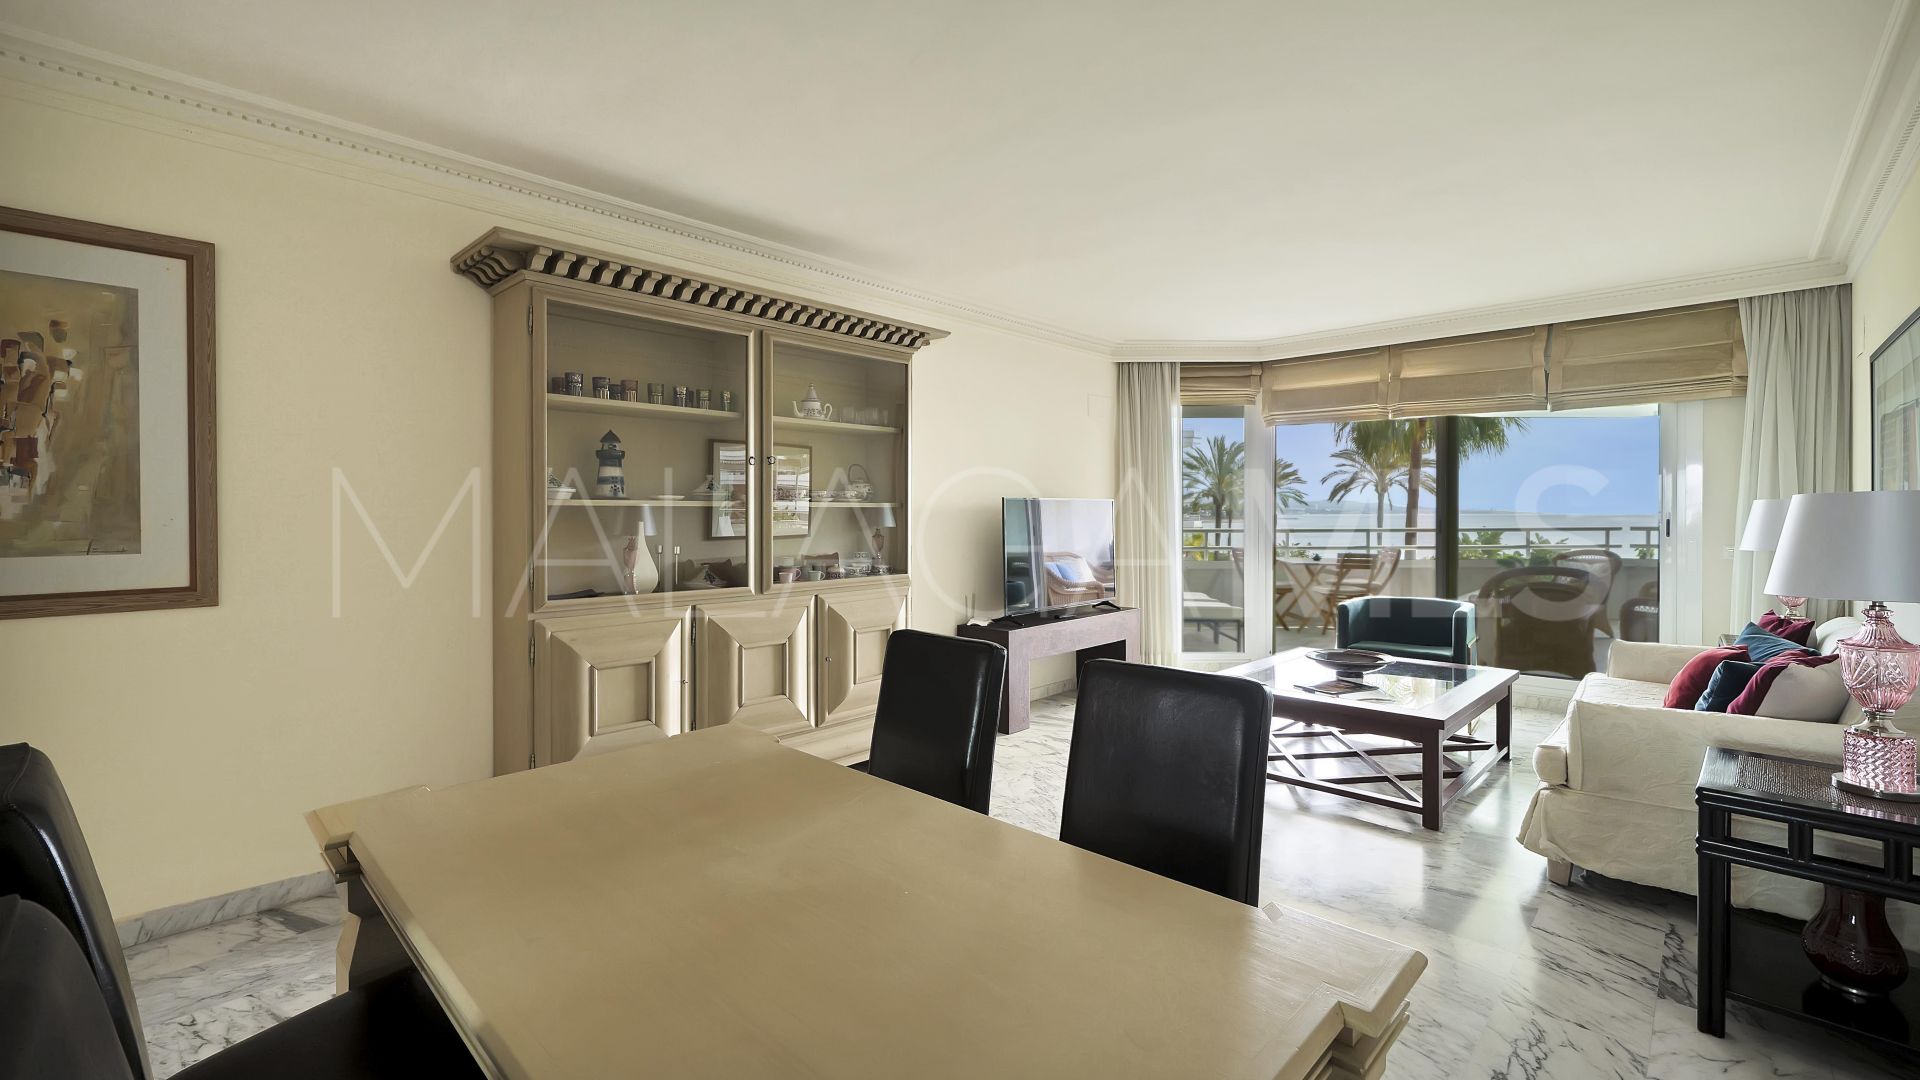 Apartment for sale in Playa Esmeralda with 2 bedrooms